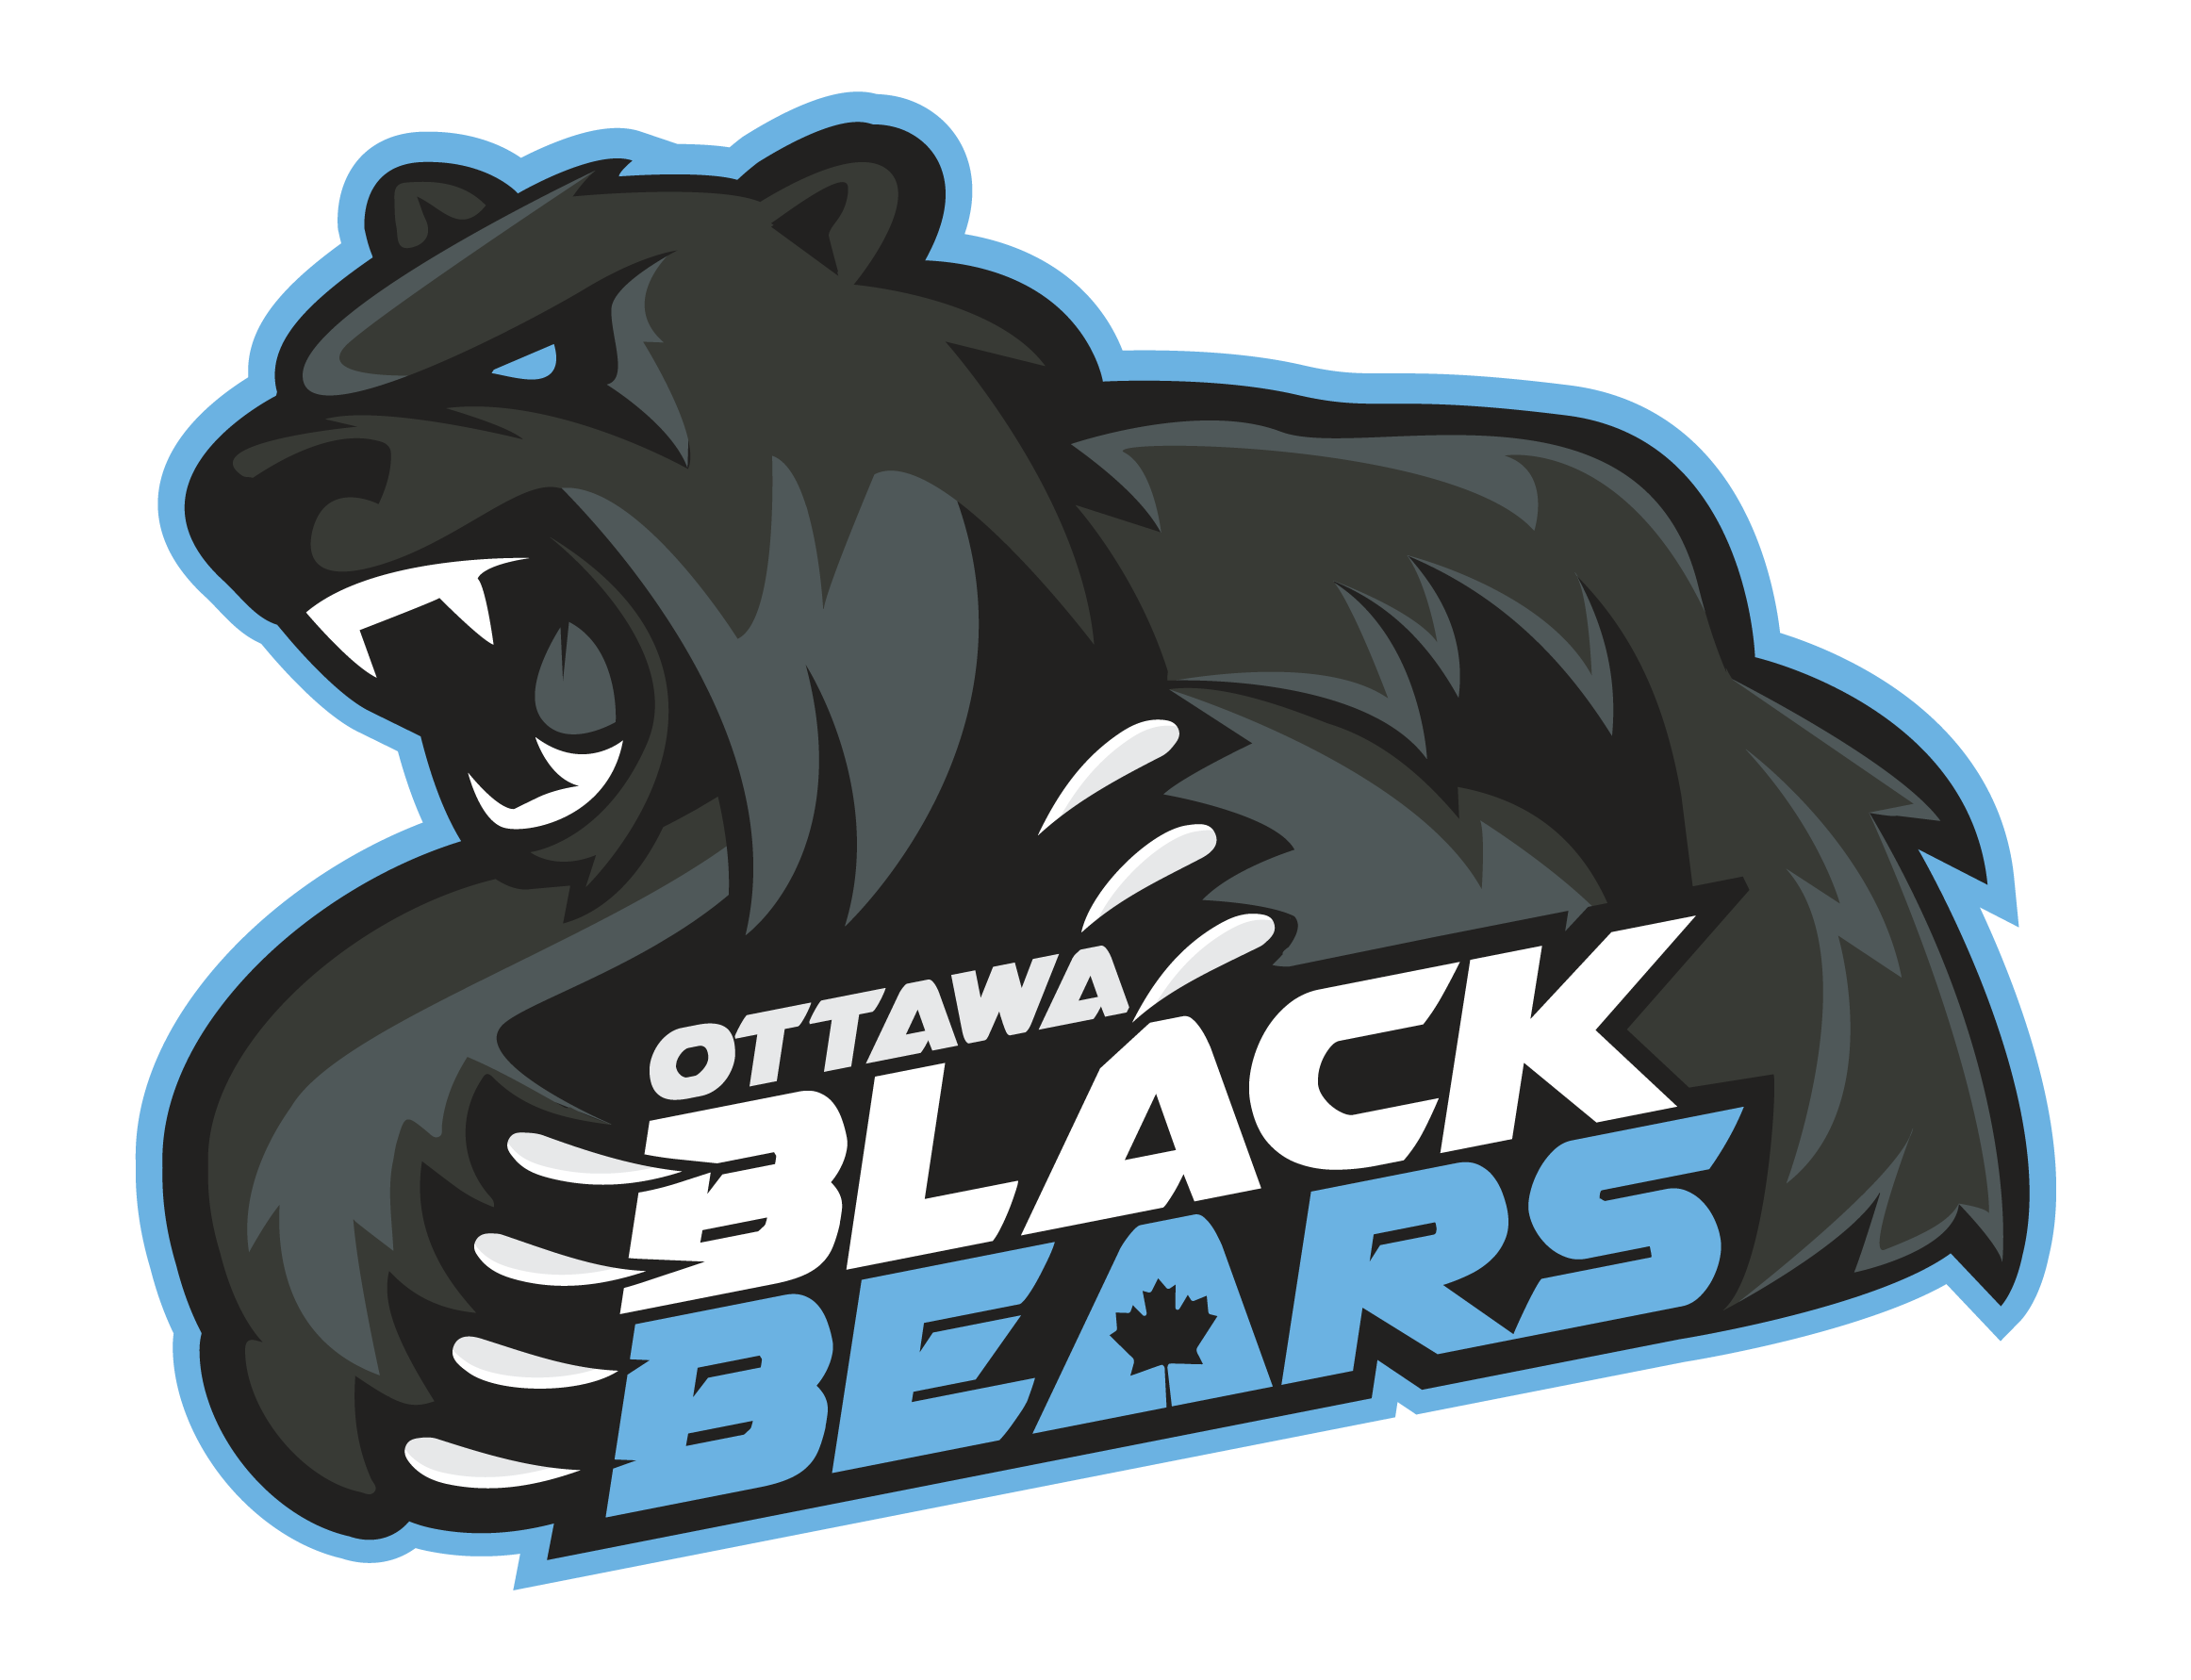 Private: Ottawa Black Bears